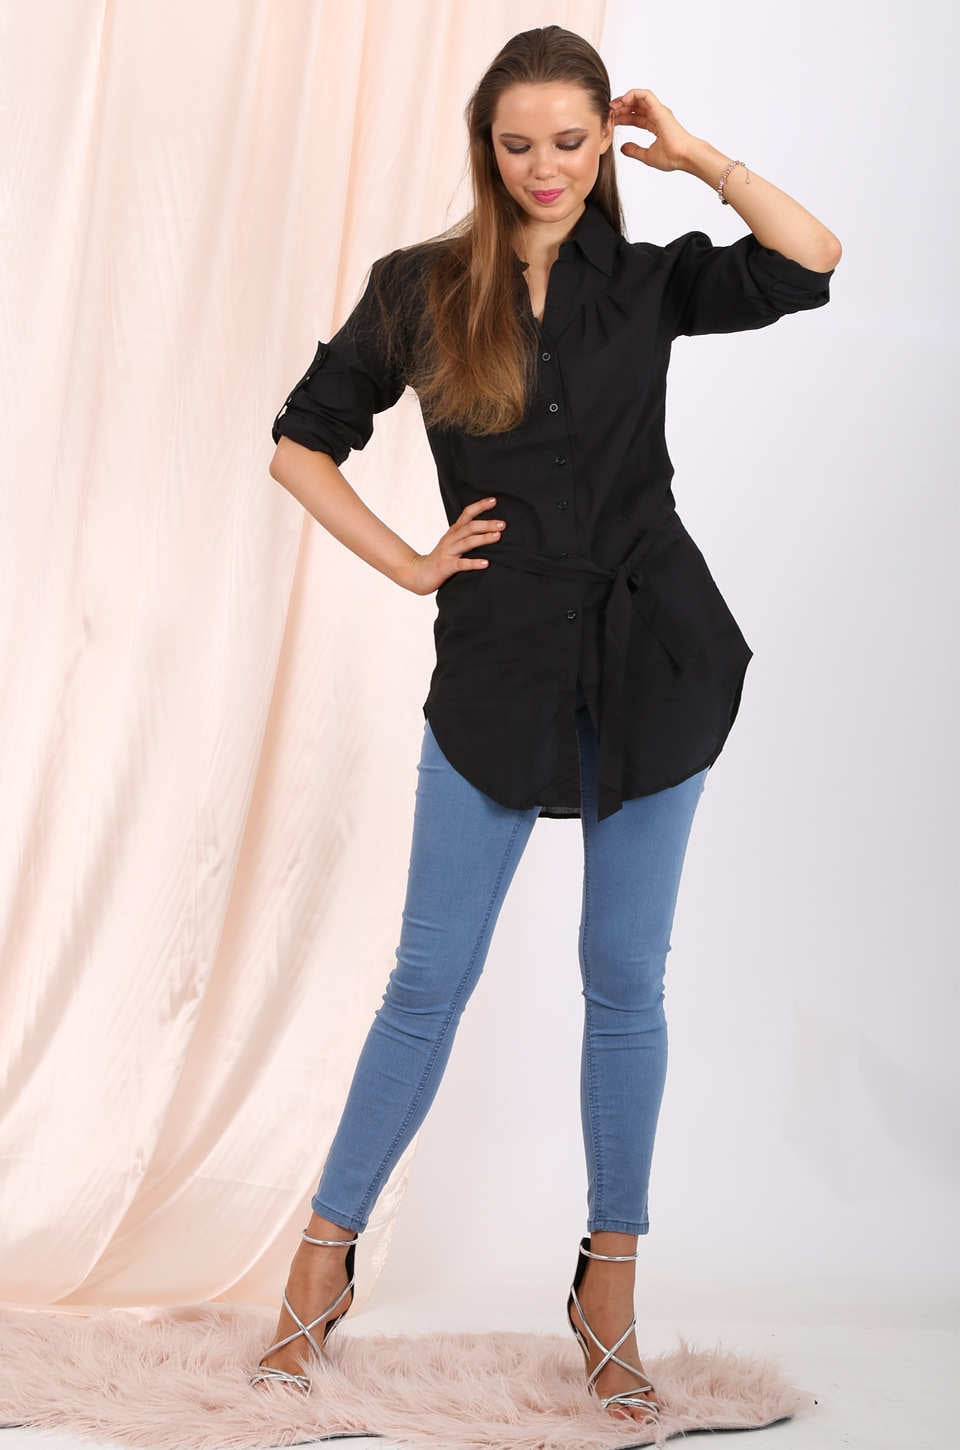 Callie long shirt in black